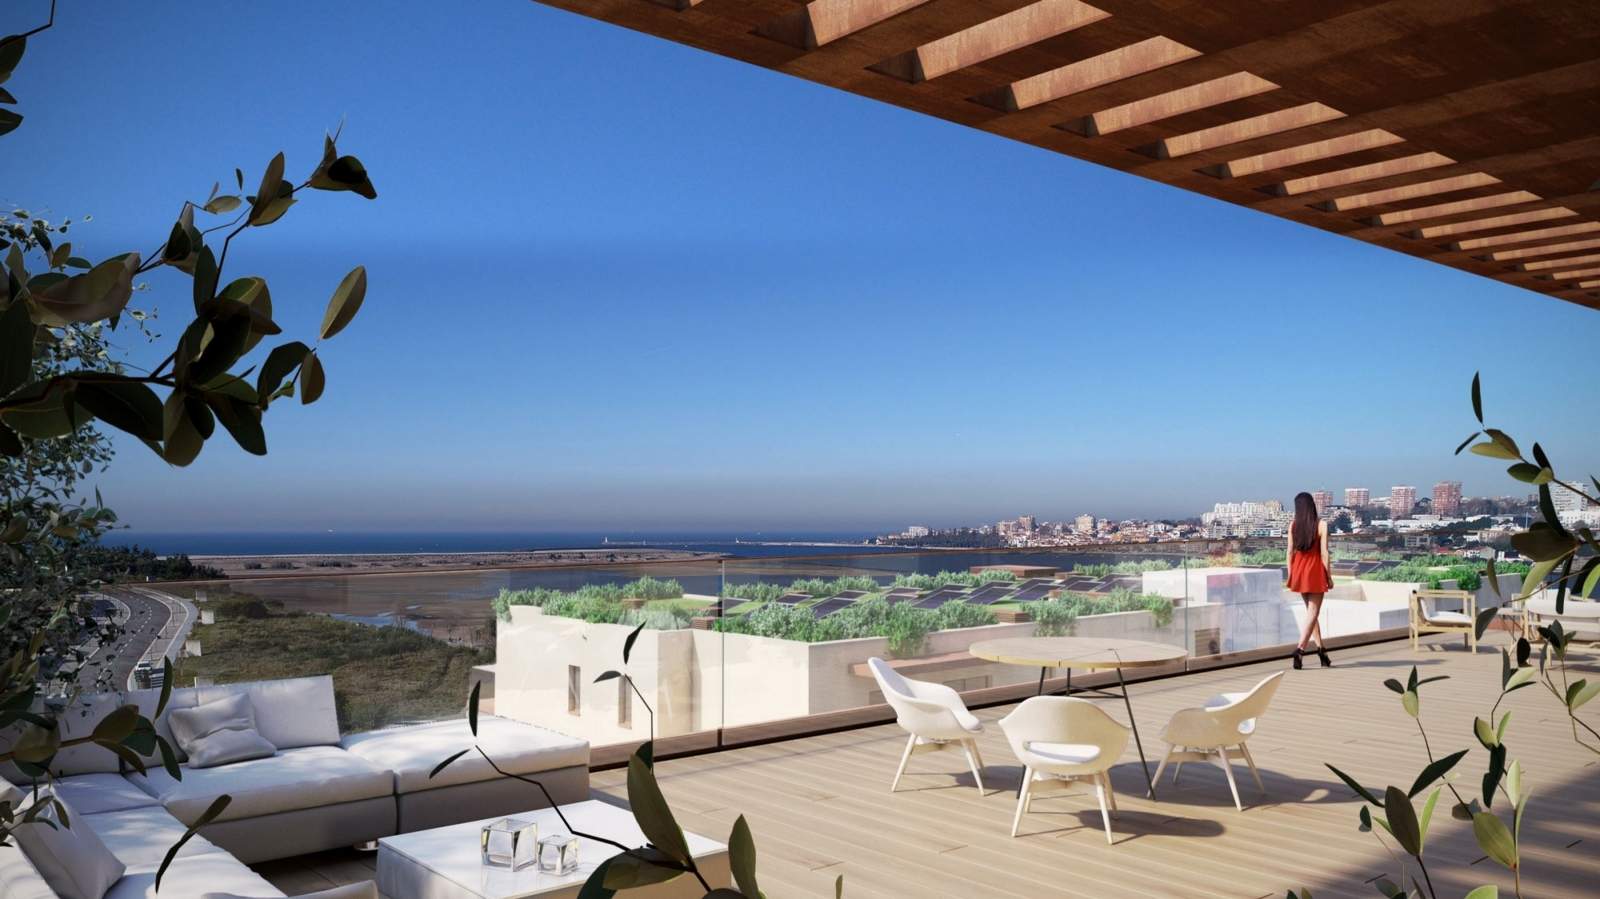 Apartment for sale with terrace, in exclusive condominium, V. N. Gaia, Porto, Portugal_175515